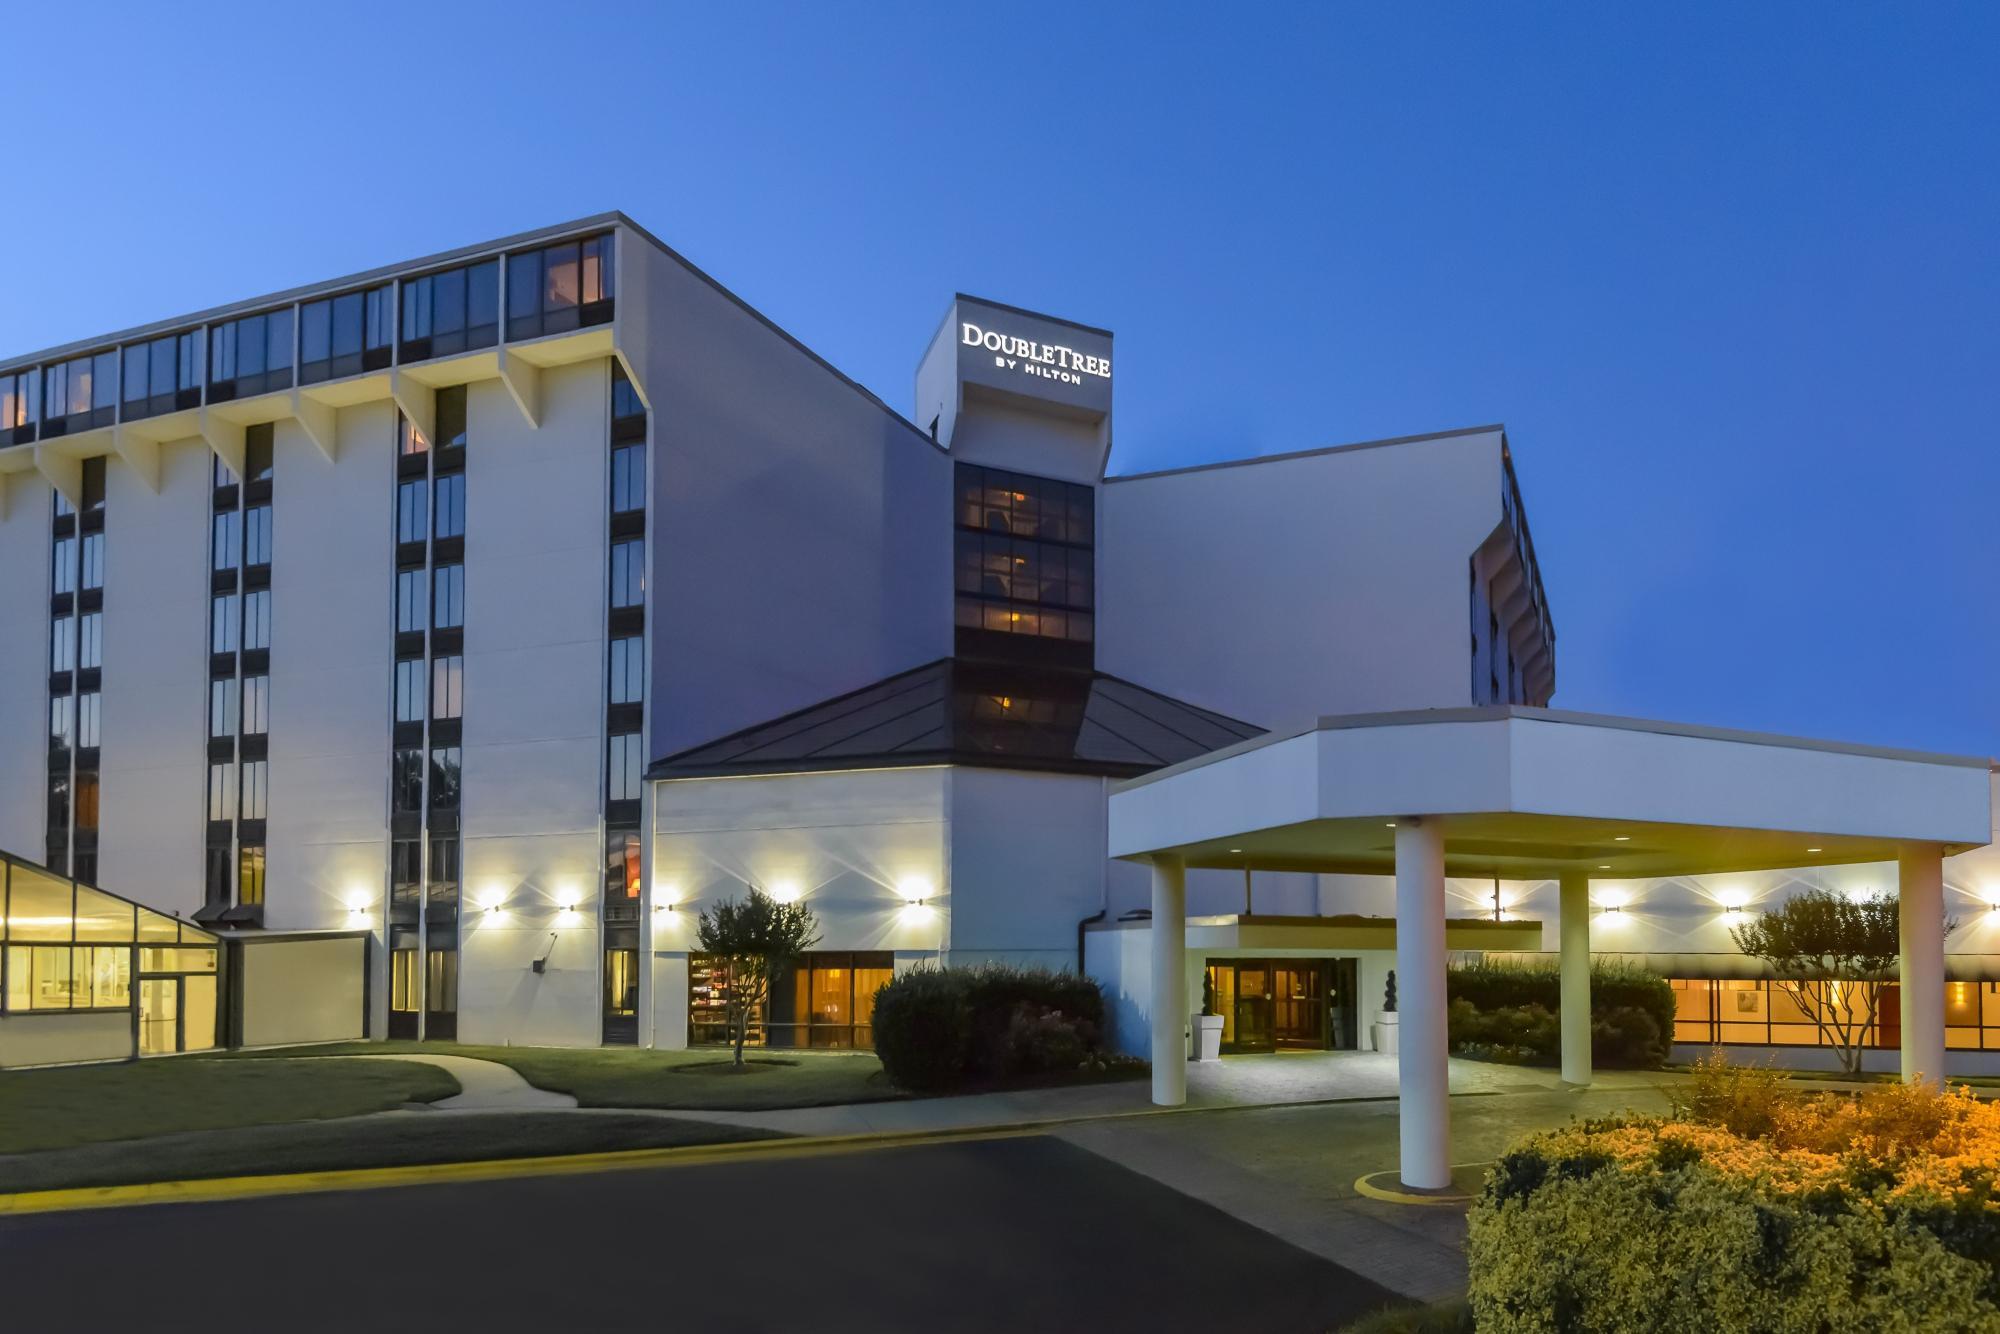 Photo of DoubleTree by Hilton Hotel Richmond - Midlothian, Richmond, VA